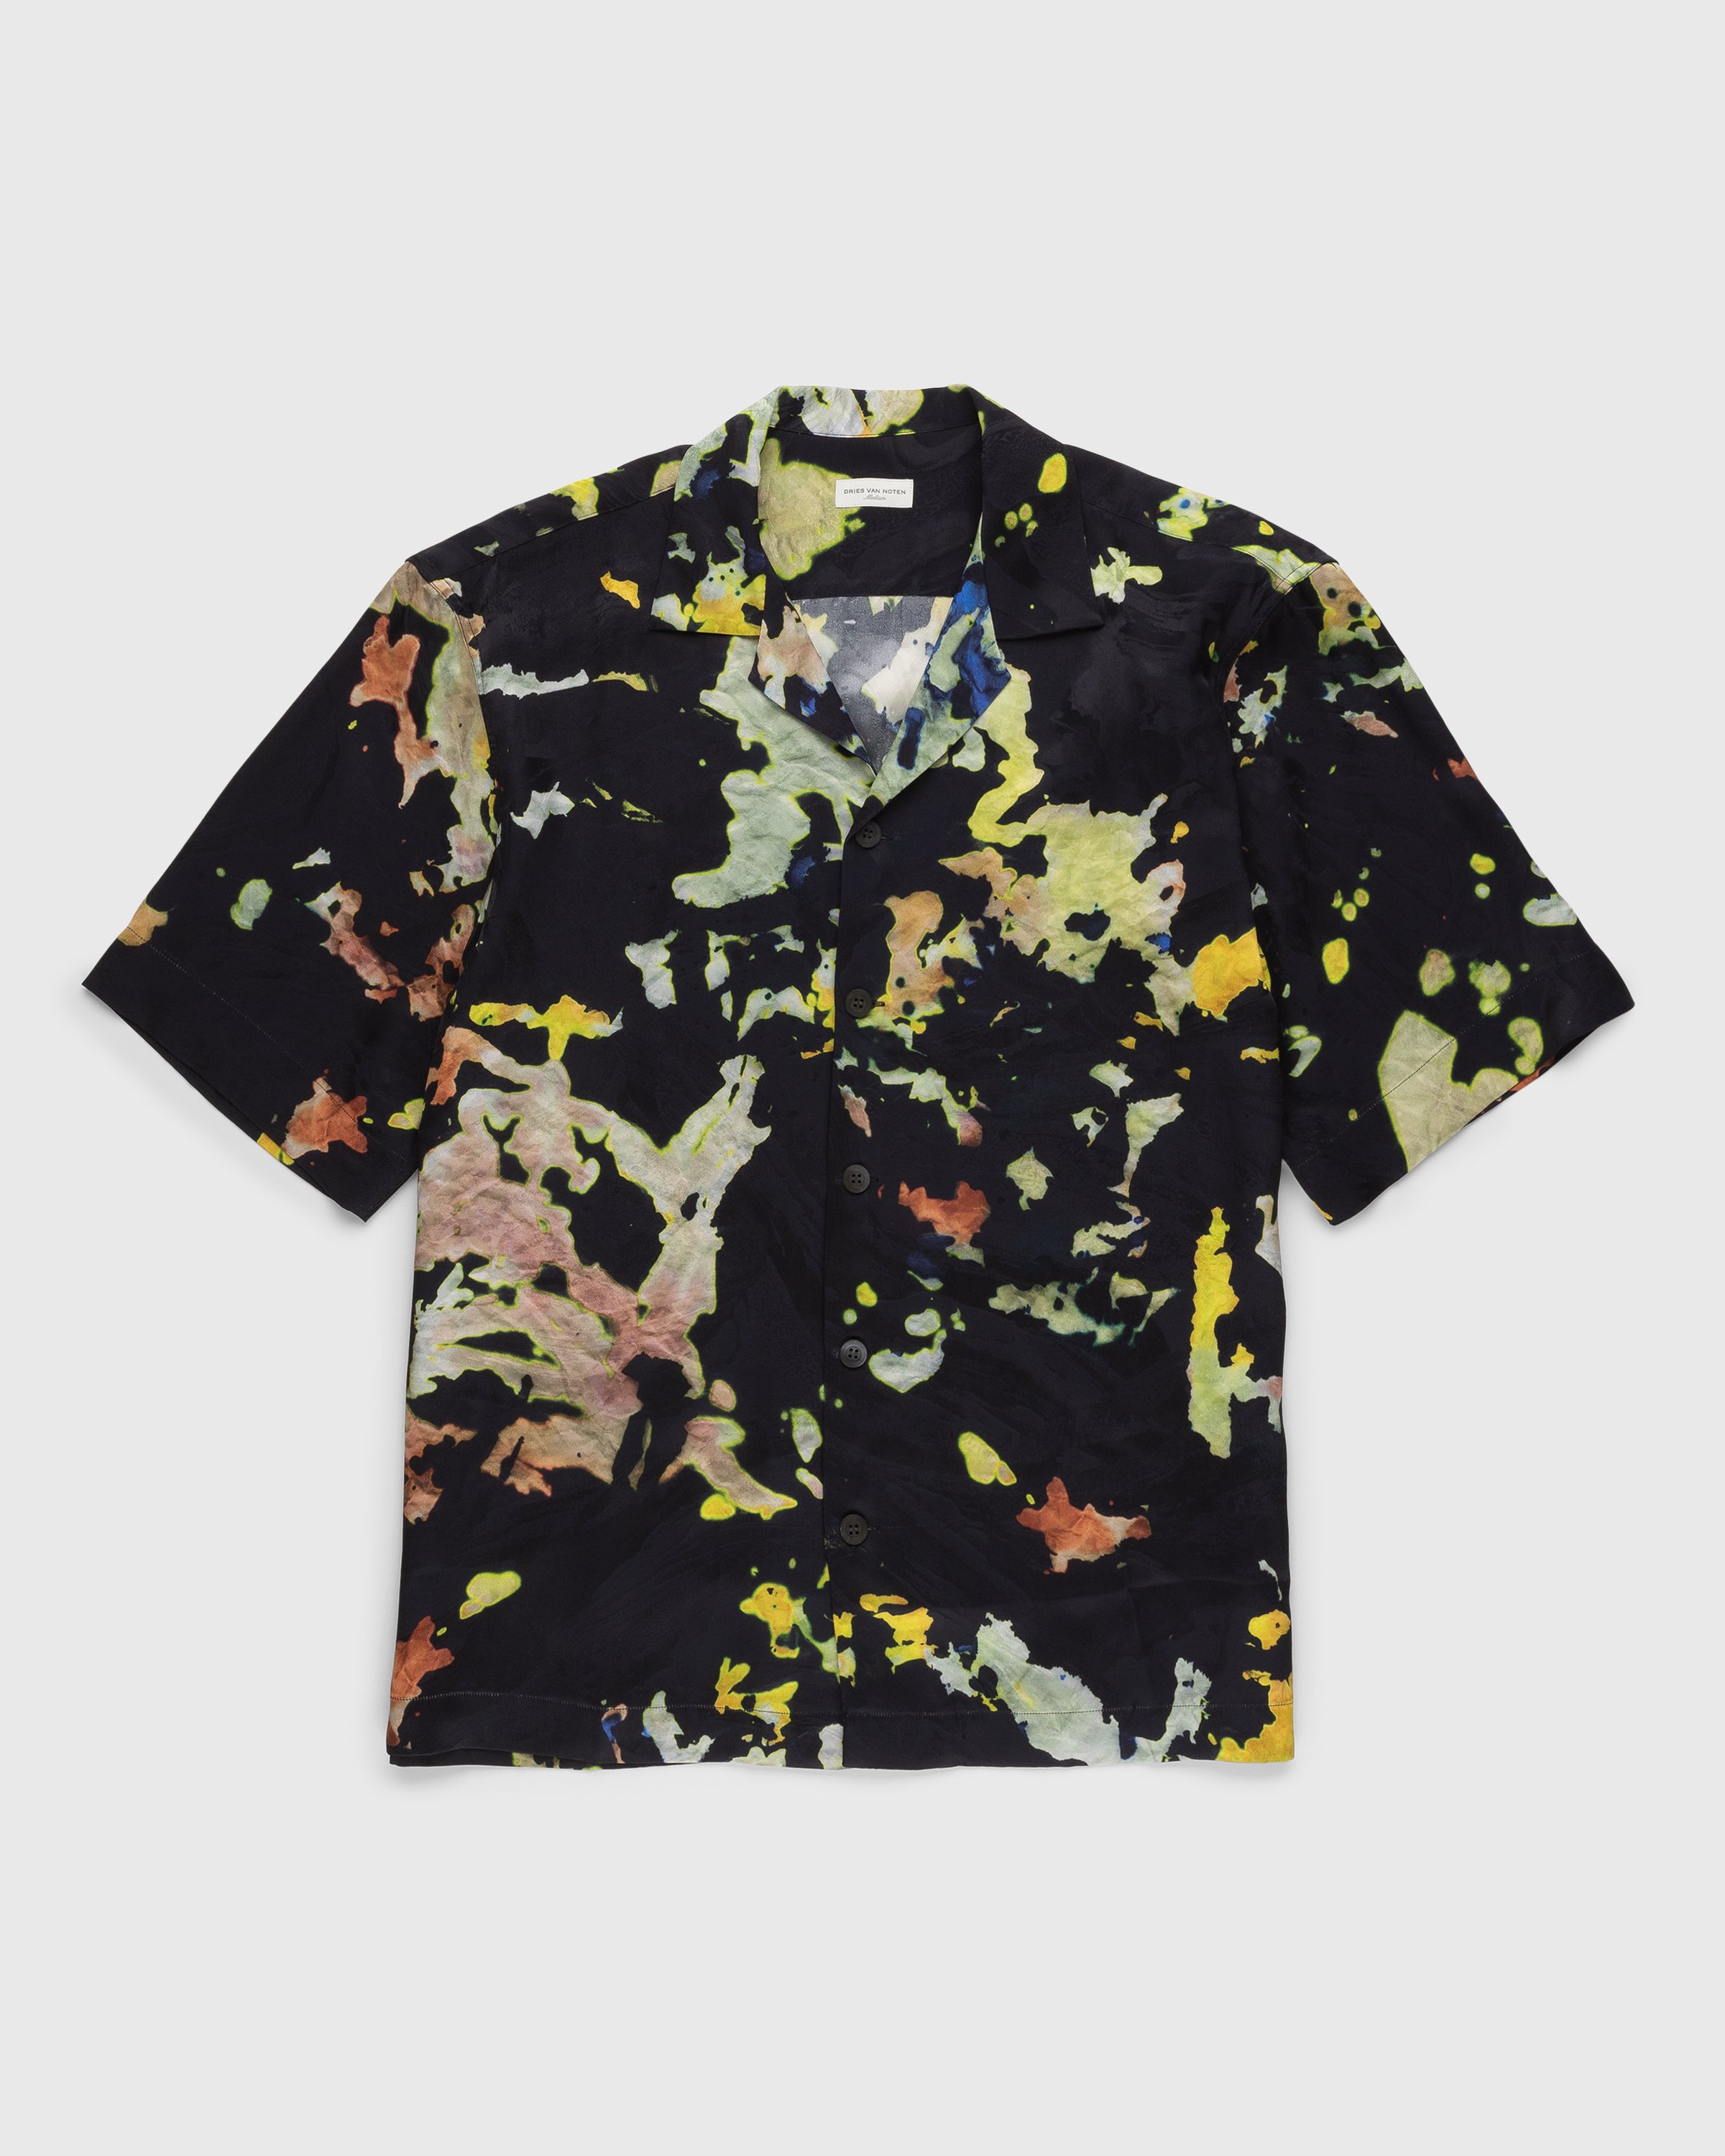 Dries van Noten - Jacquard Cassi Shirt Multi - Clothing - Multi - Image 1